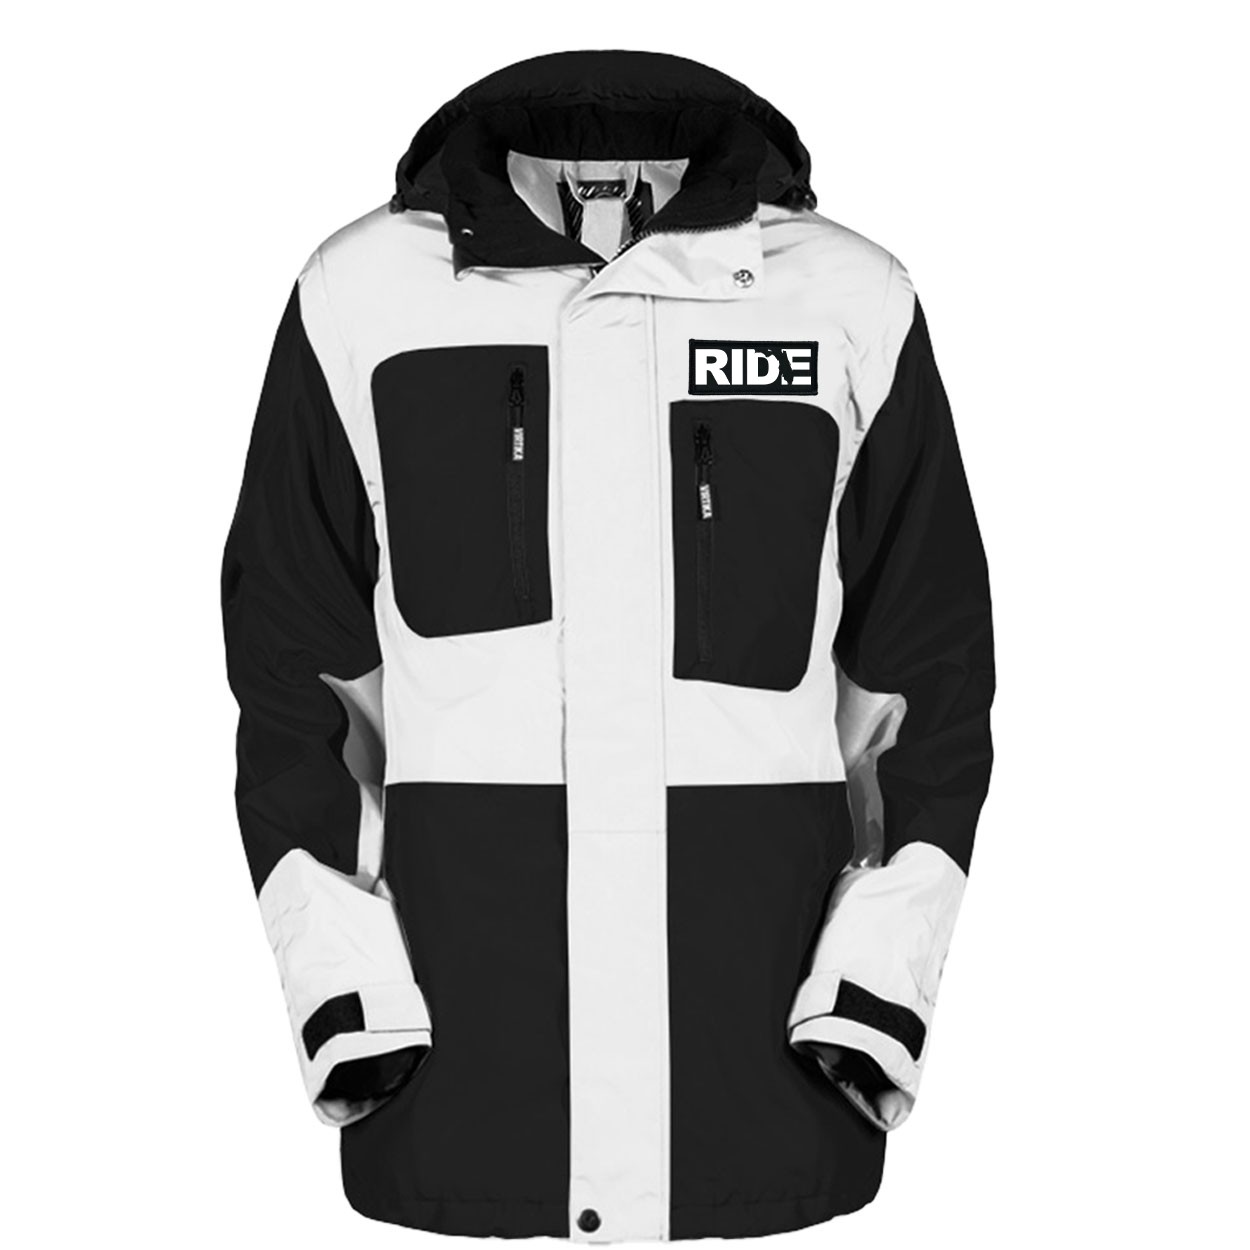 Ride Florida Classic Woven Patch Pro Snowboard Jacket (Black/White)